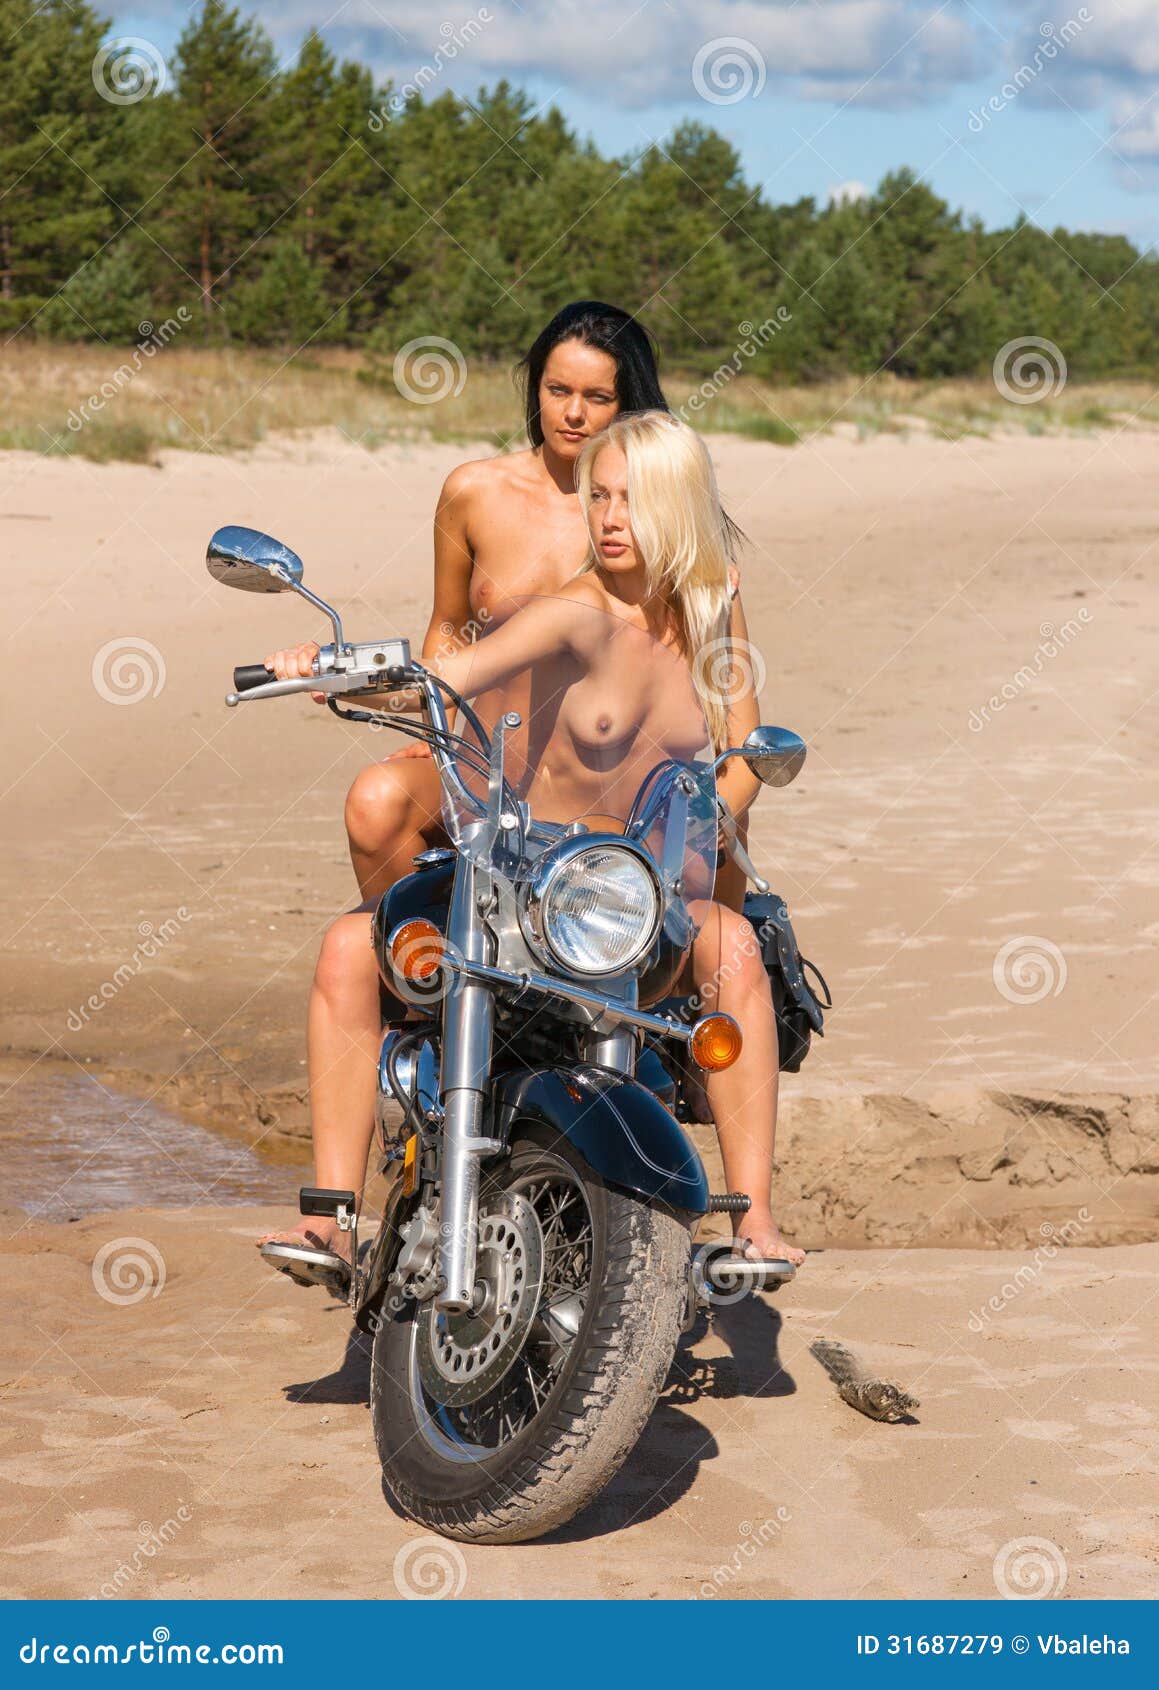 Nude motorcycle women